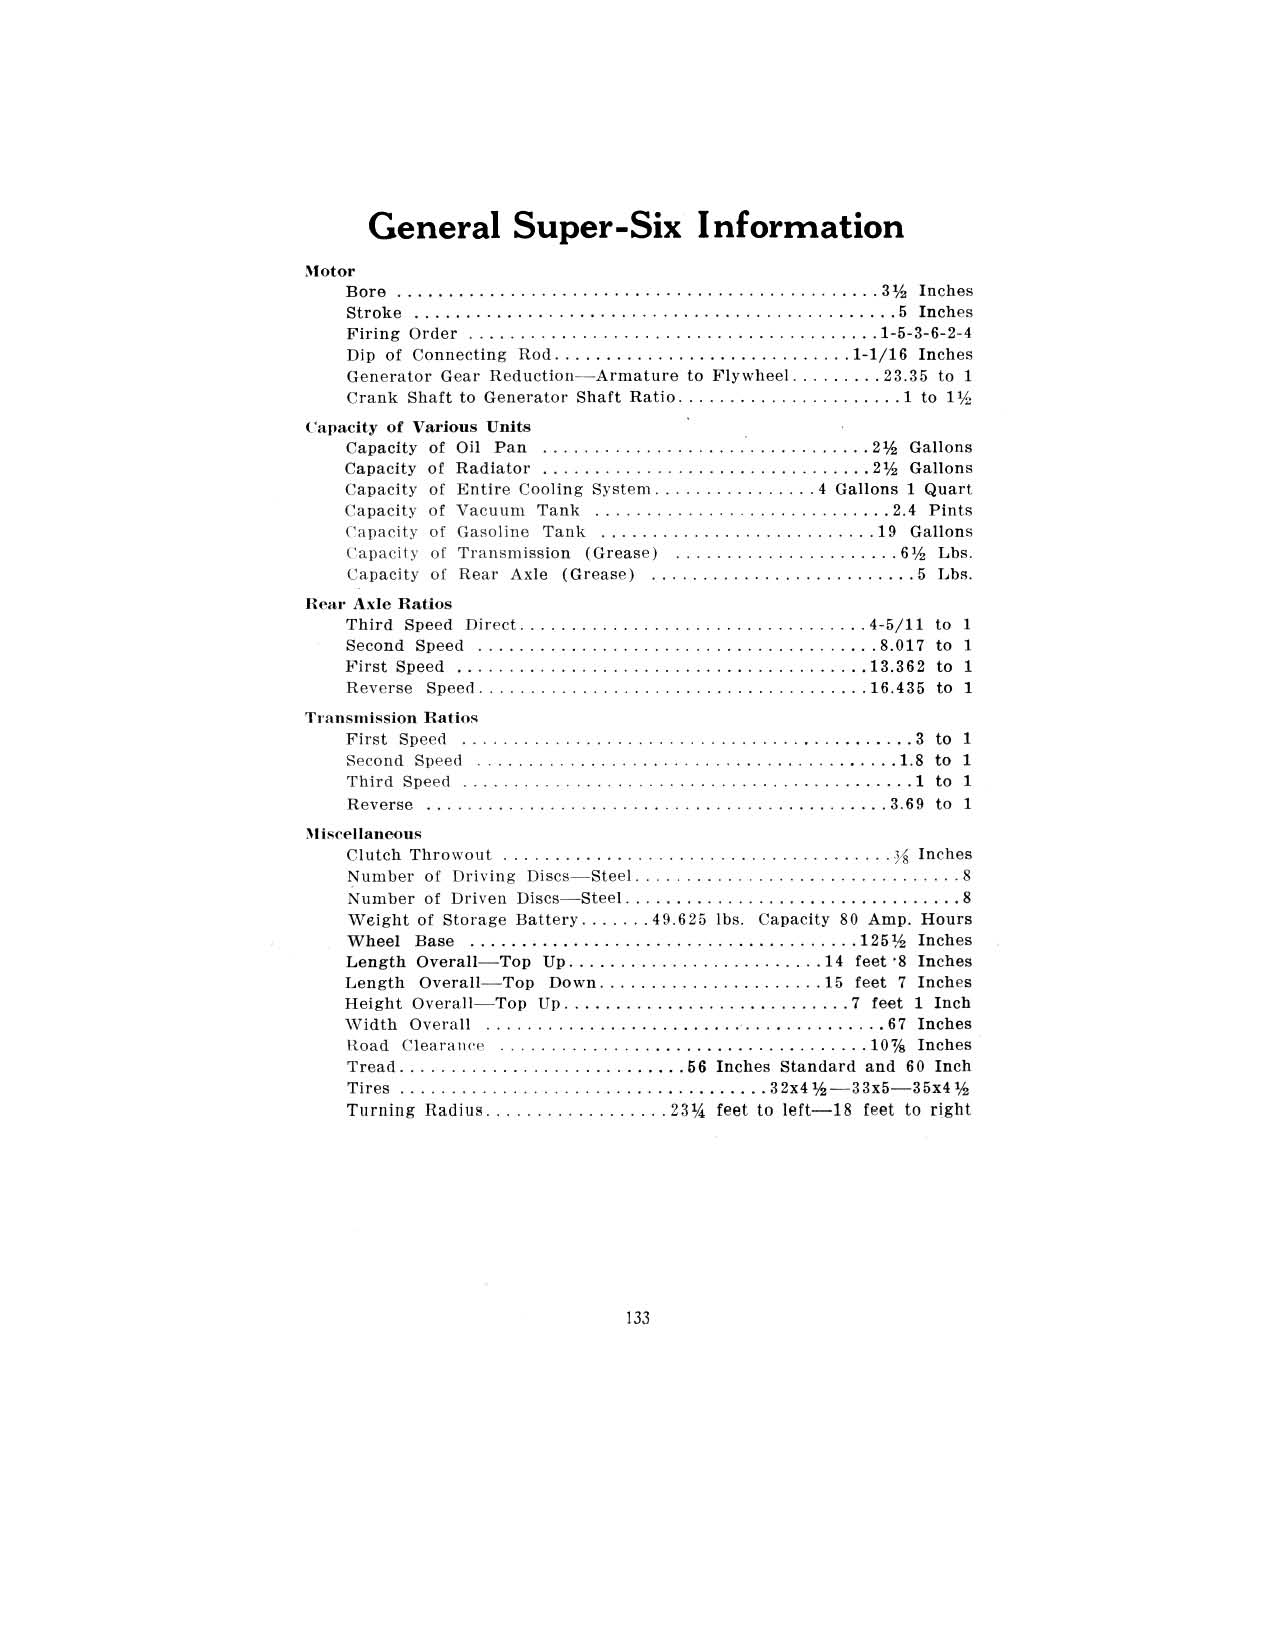 1916-18_Hudson_Super-Six_Service_Manual-135